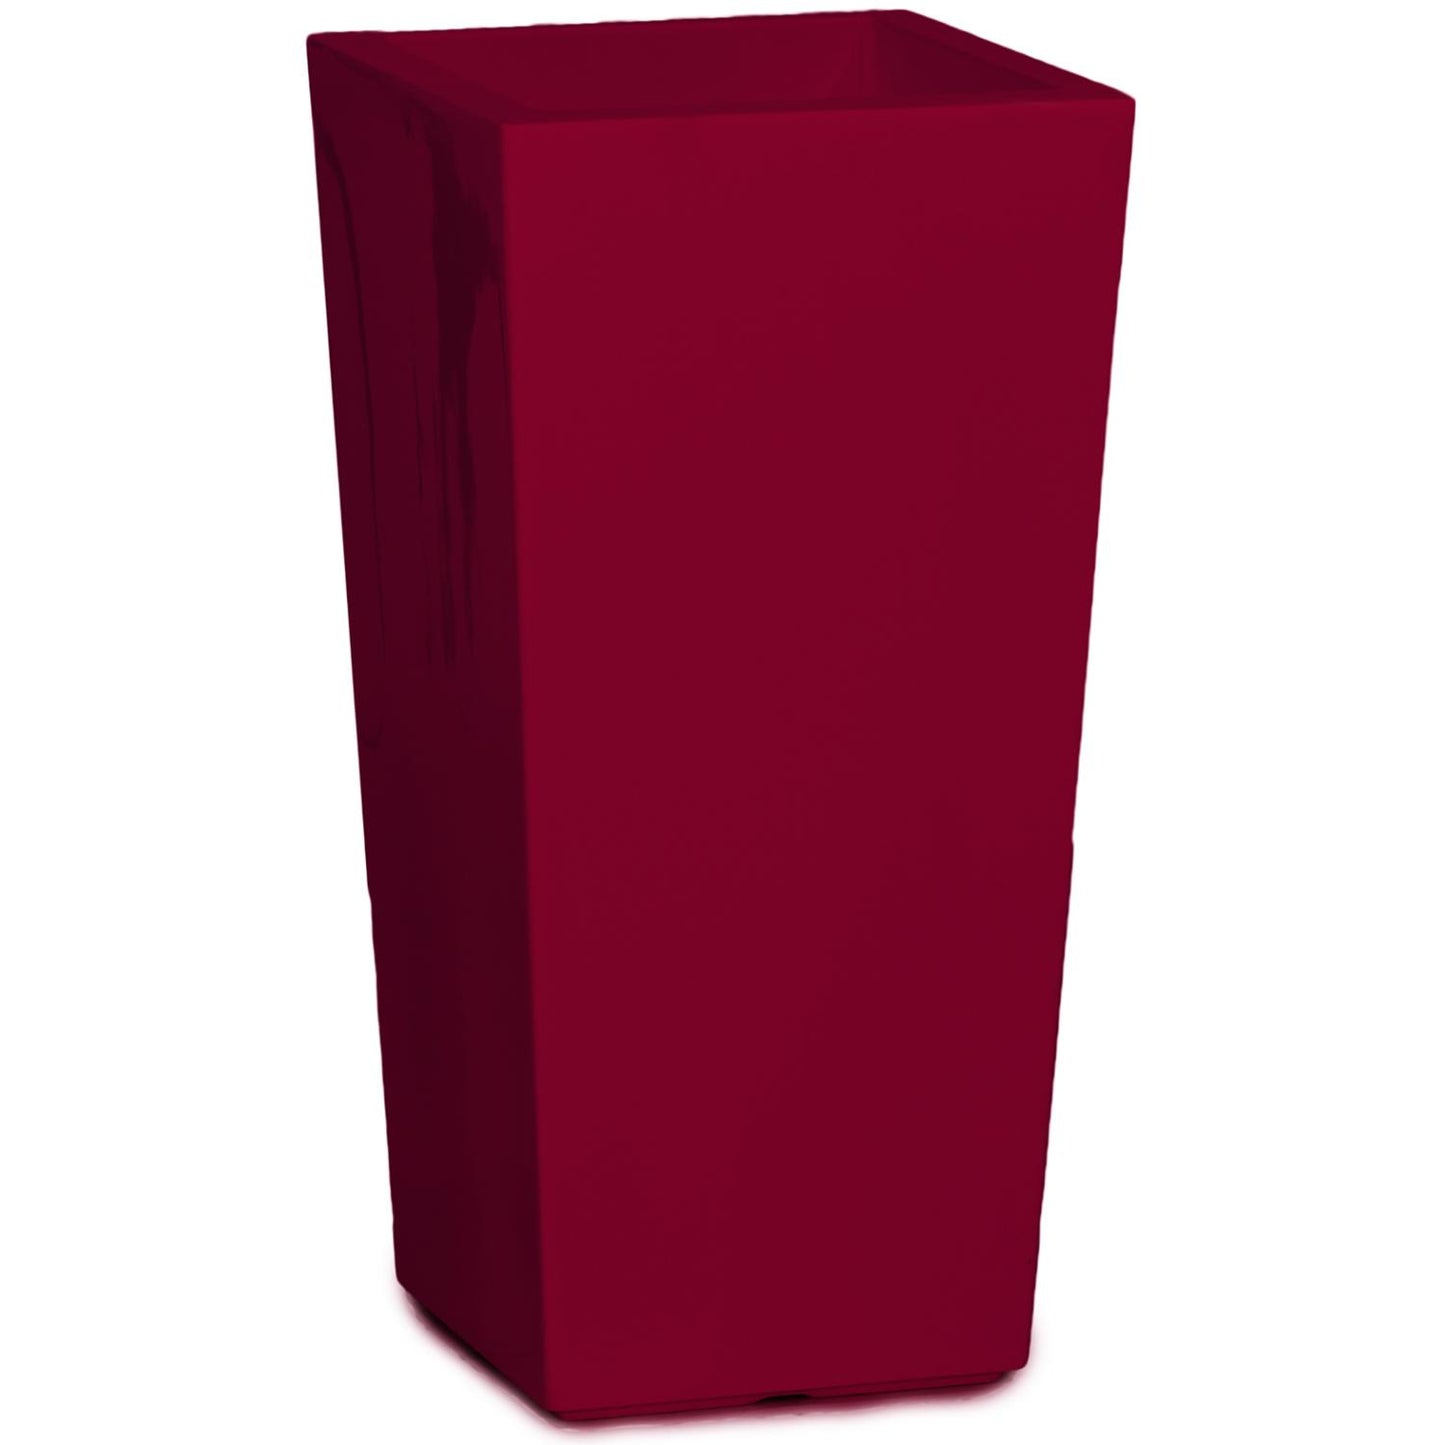 Premium Classic konisches Pflanzgefäß, 42x42/75 cm, rubinrot